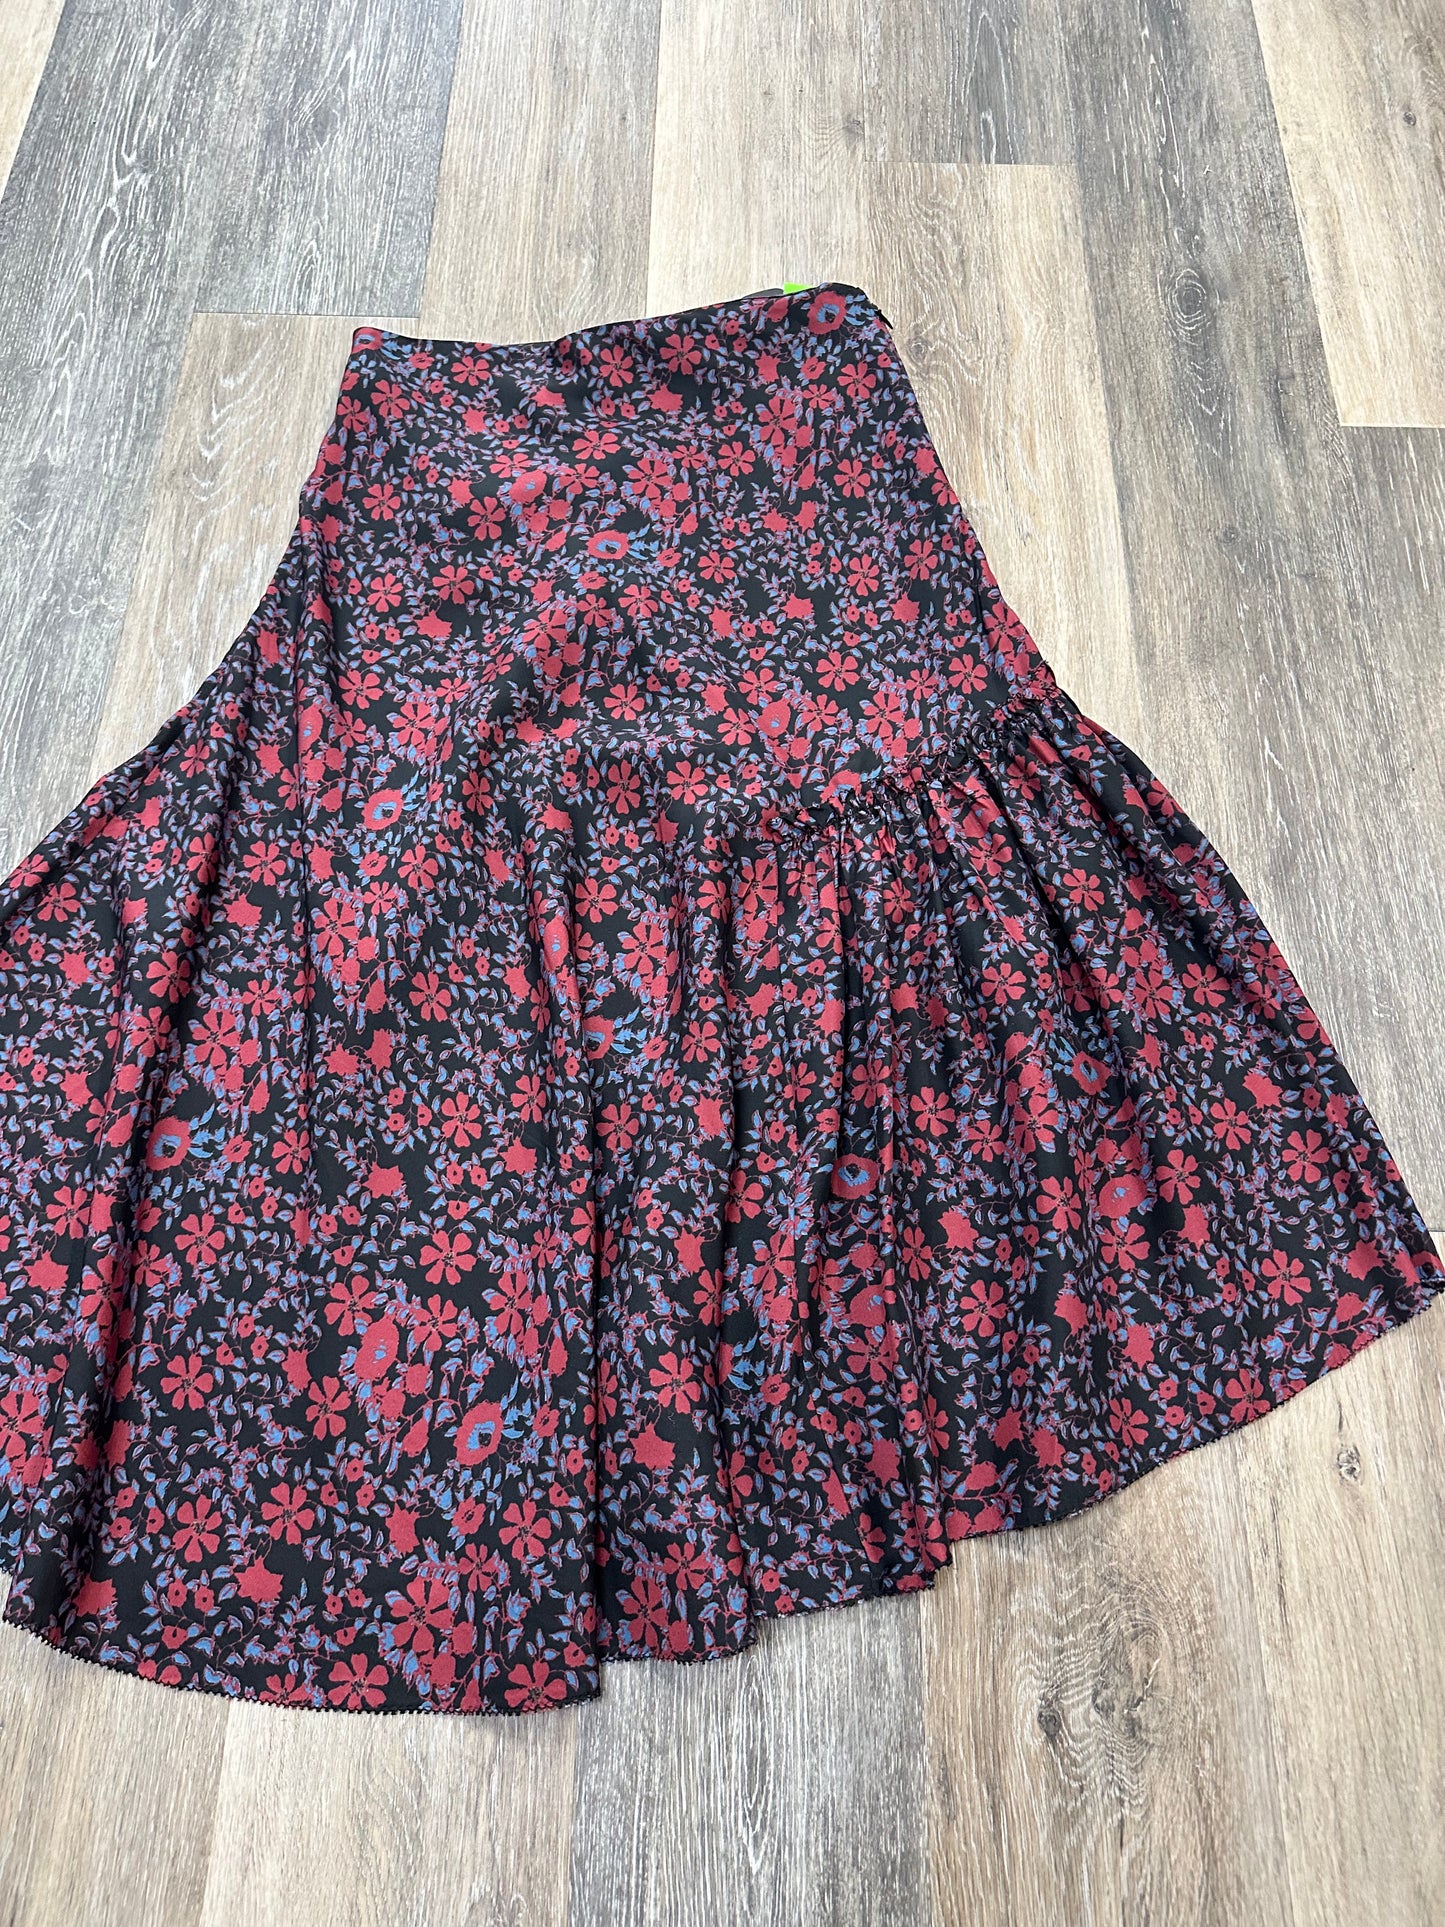 Skirt Midi By Apiece Apart  Size: 2